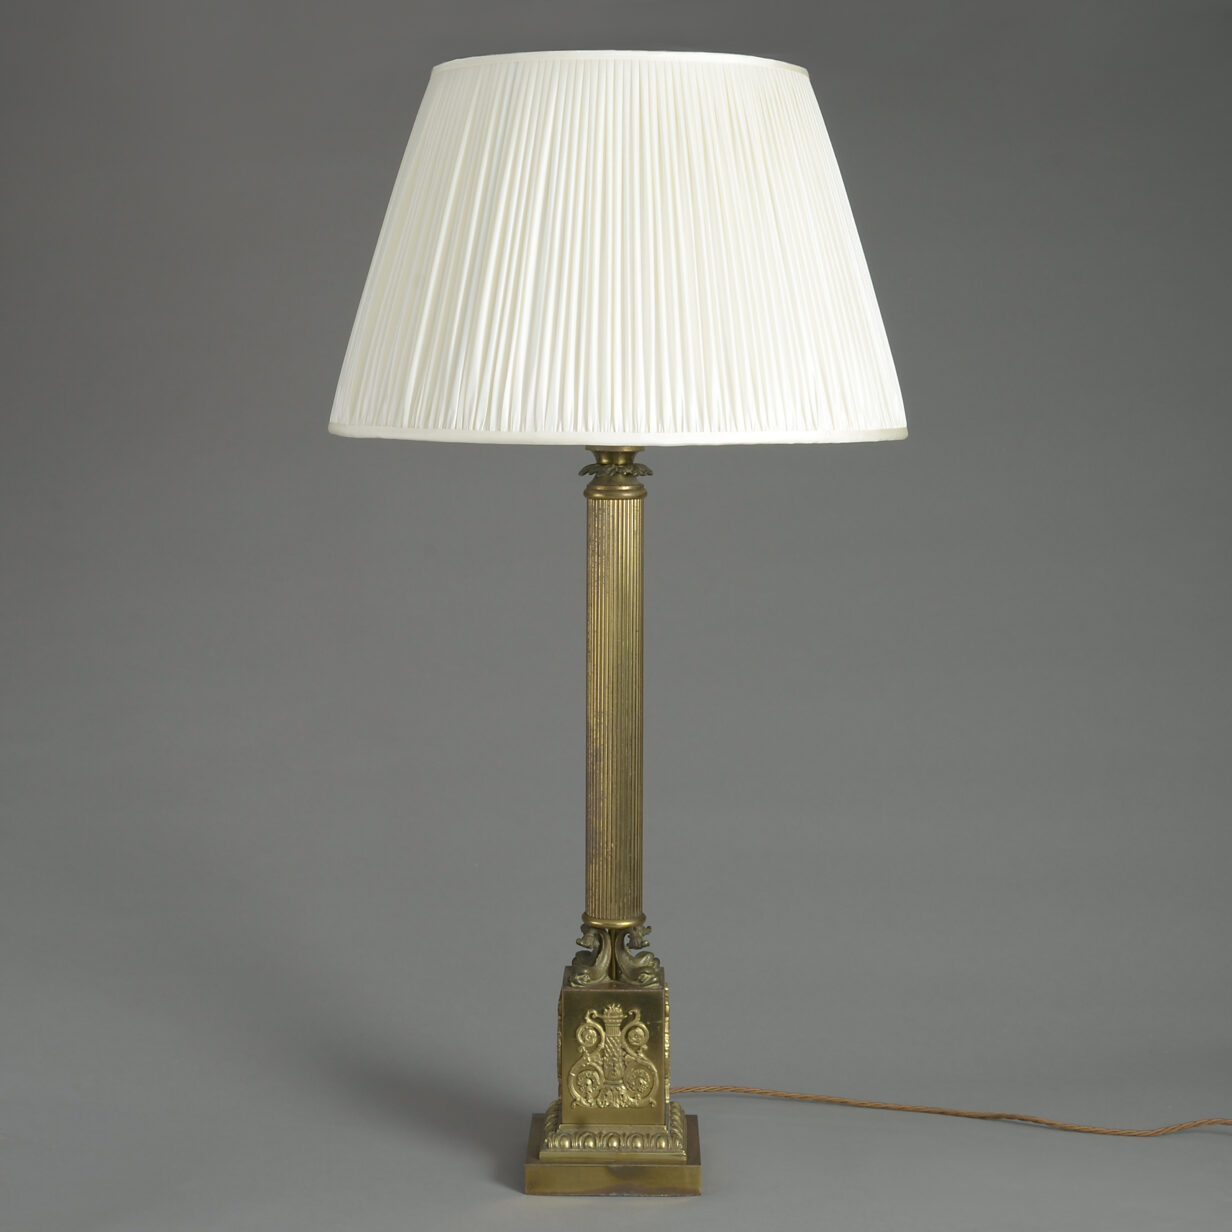 Early 19th century brass column lamp